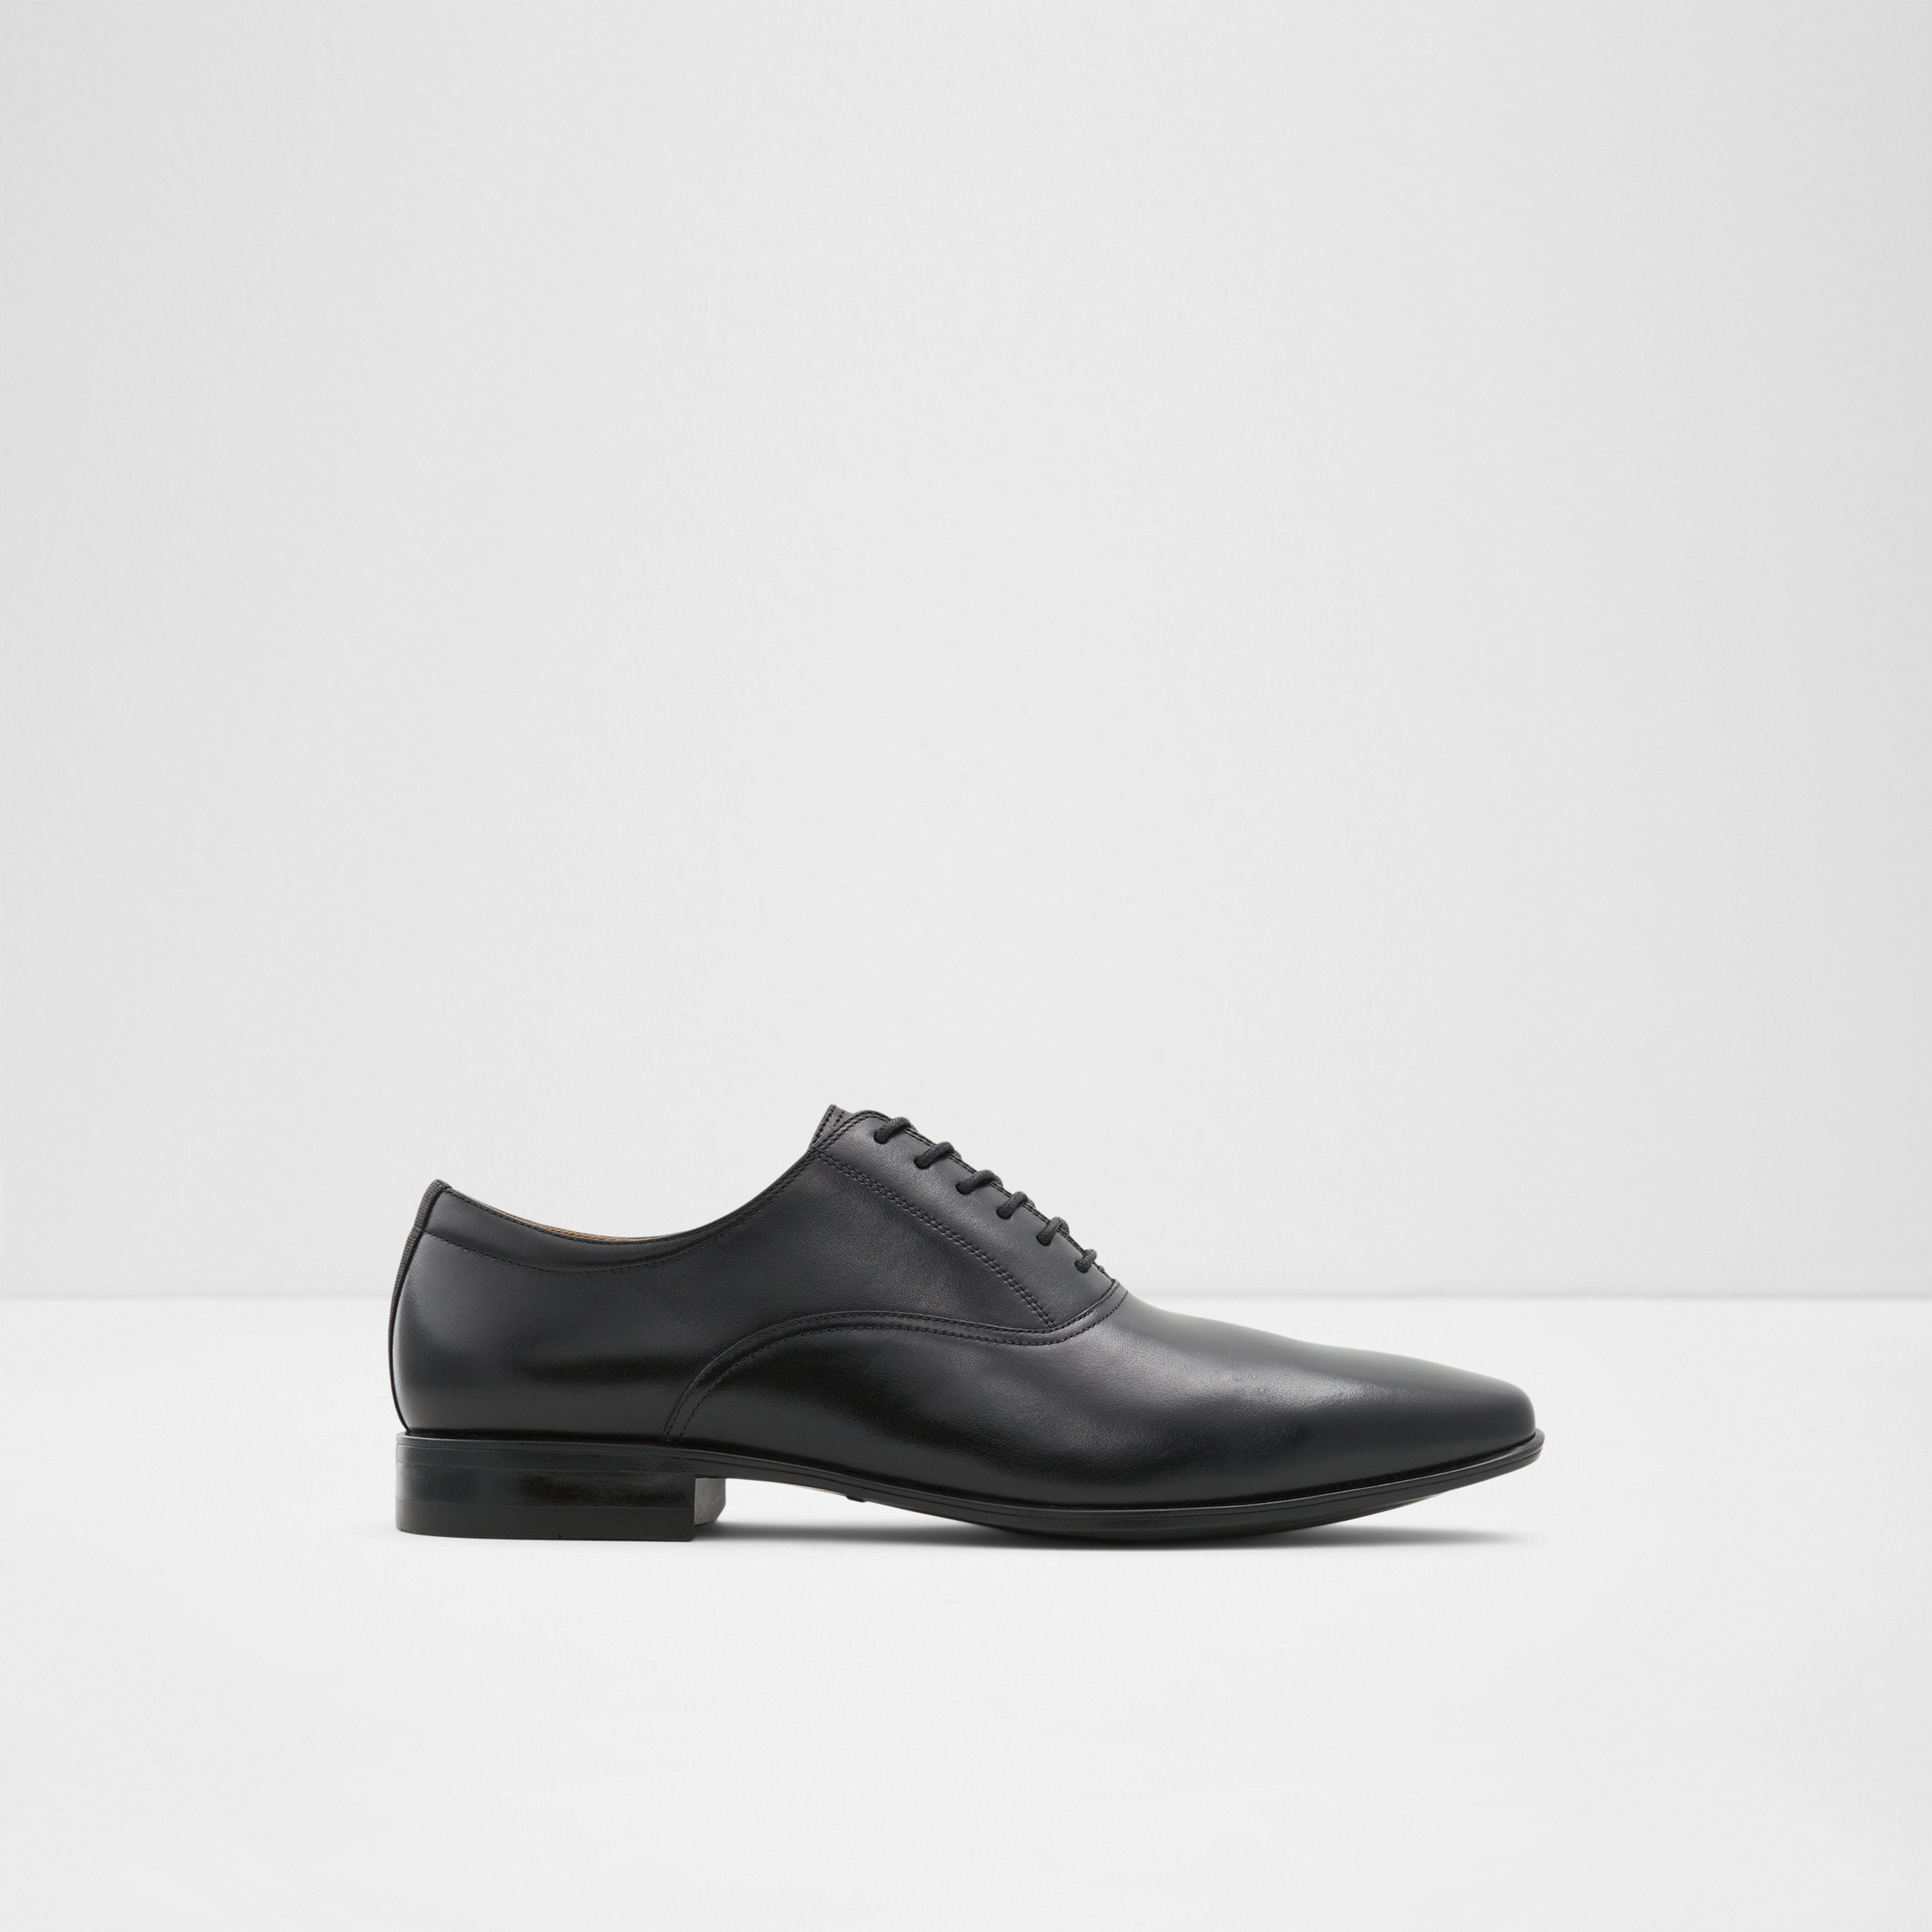 Aldo Shoes Nathon - Men's